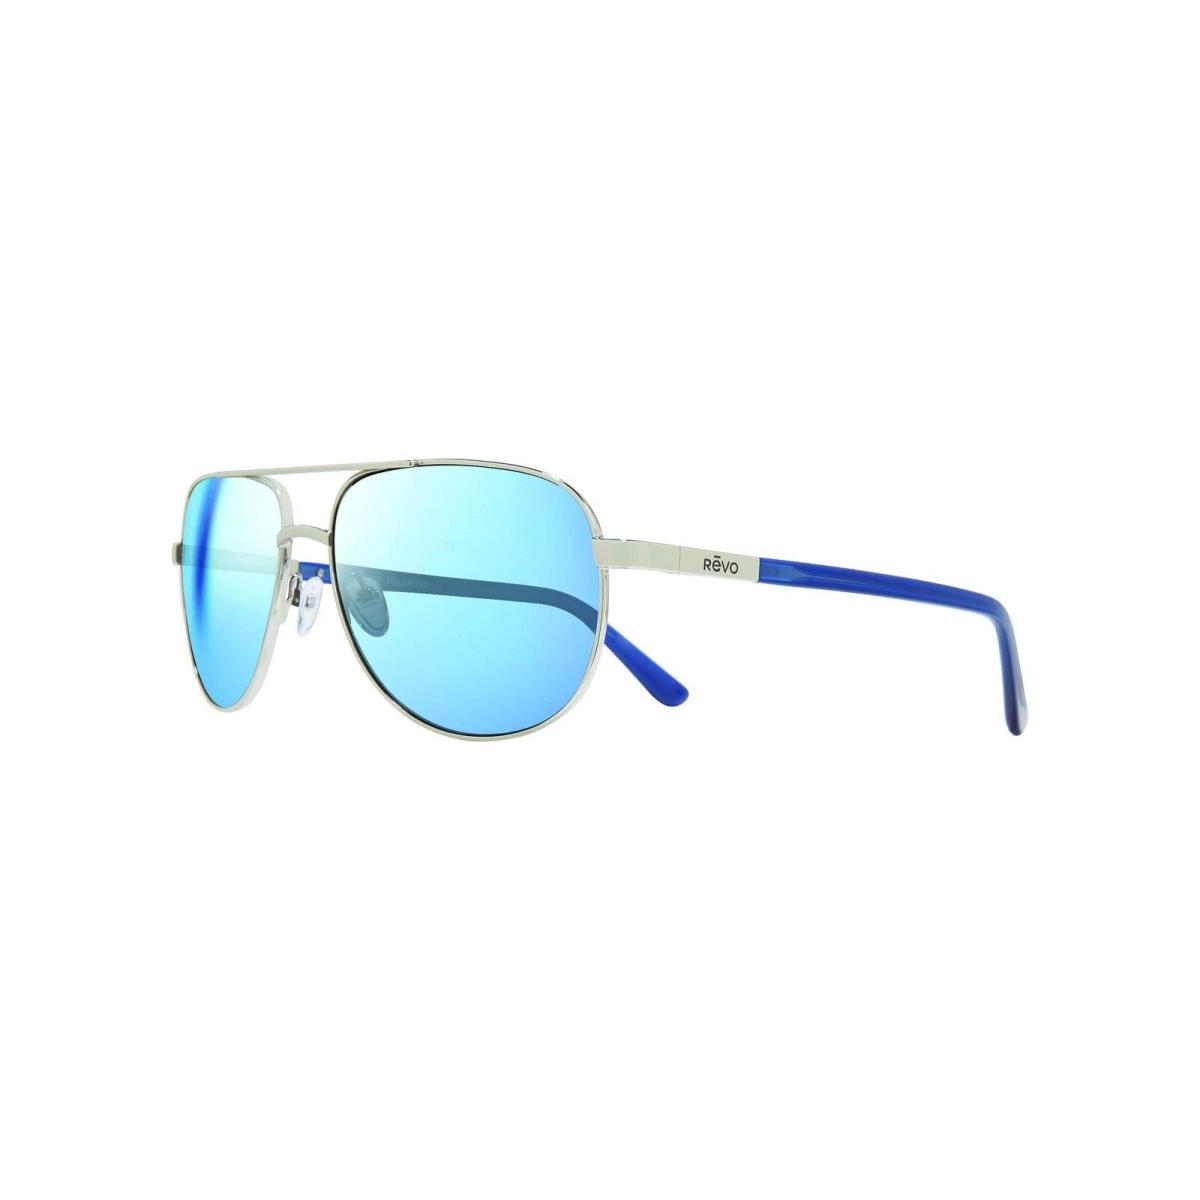 Revo Sunglasses Conrad: Polarized Lens with Metal Aviator Frame 59 Millimeters